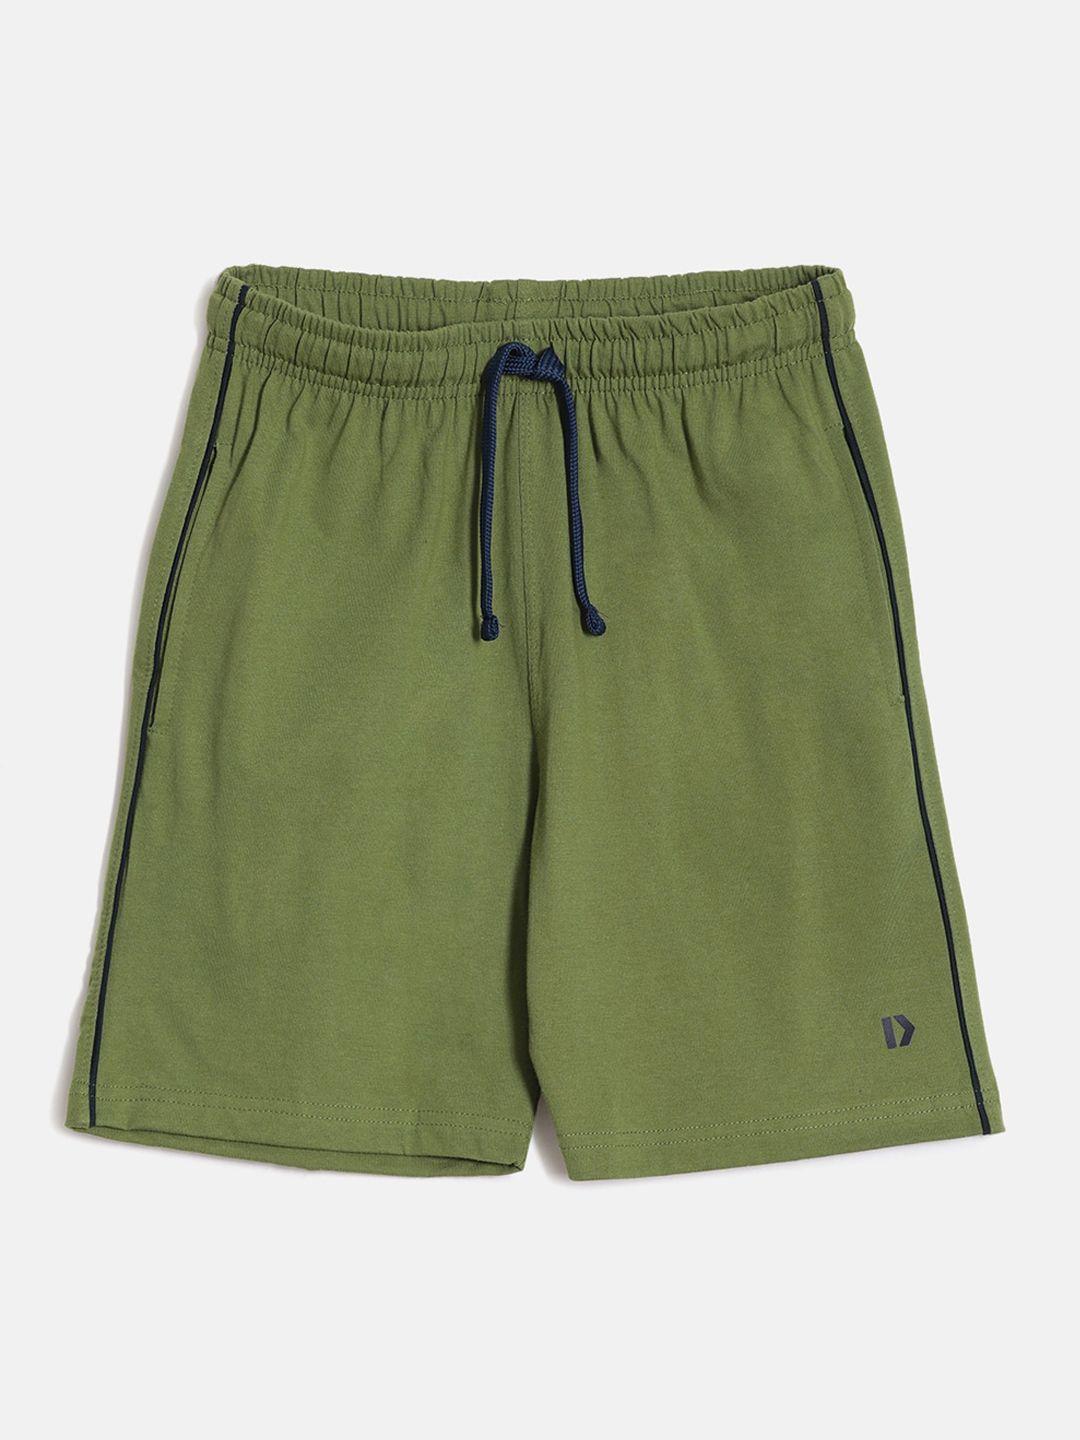 dixcy scott boys mid-rise cotton shorts